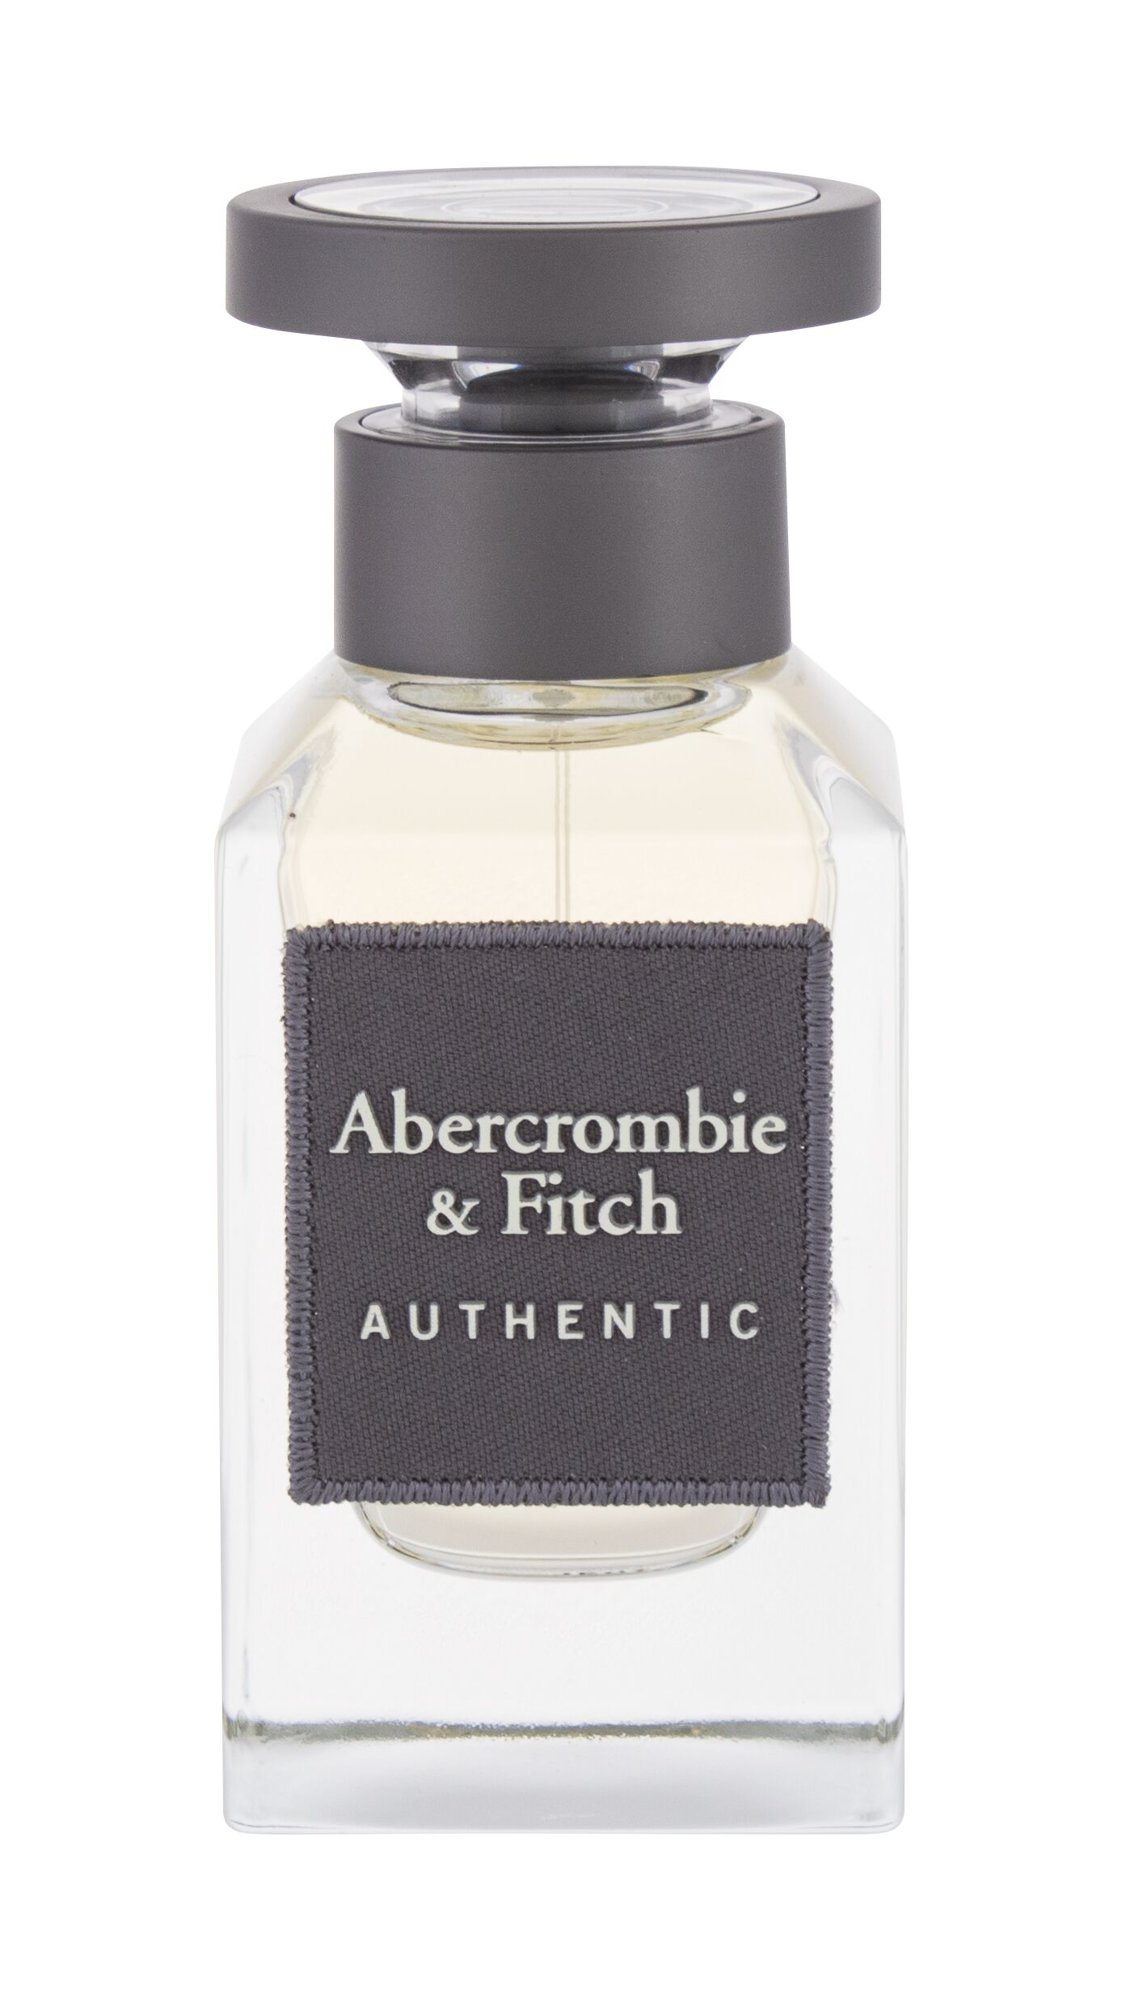 Abercrombie & Fitch Authentic, Toaletní voda 50ml